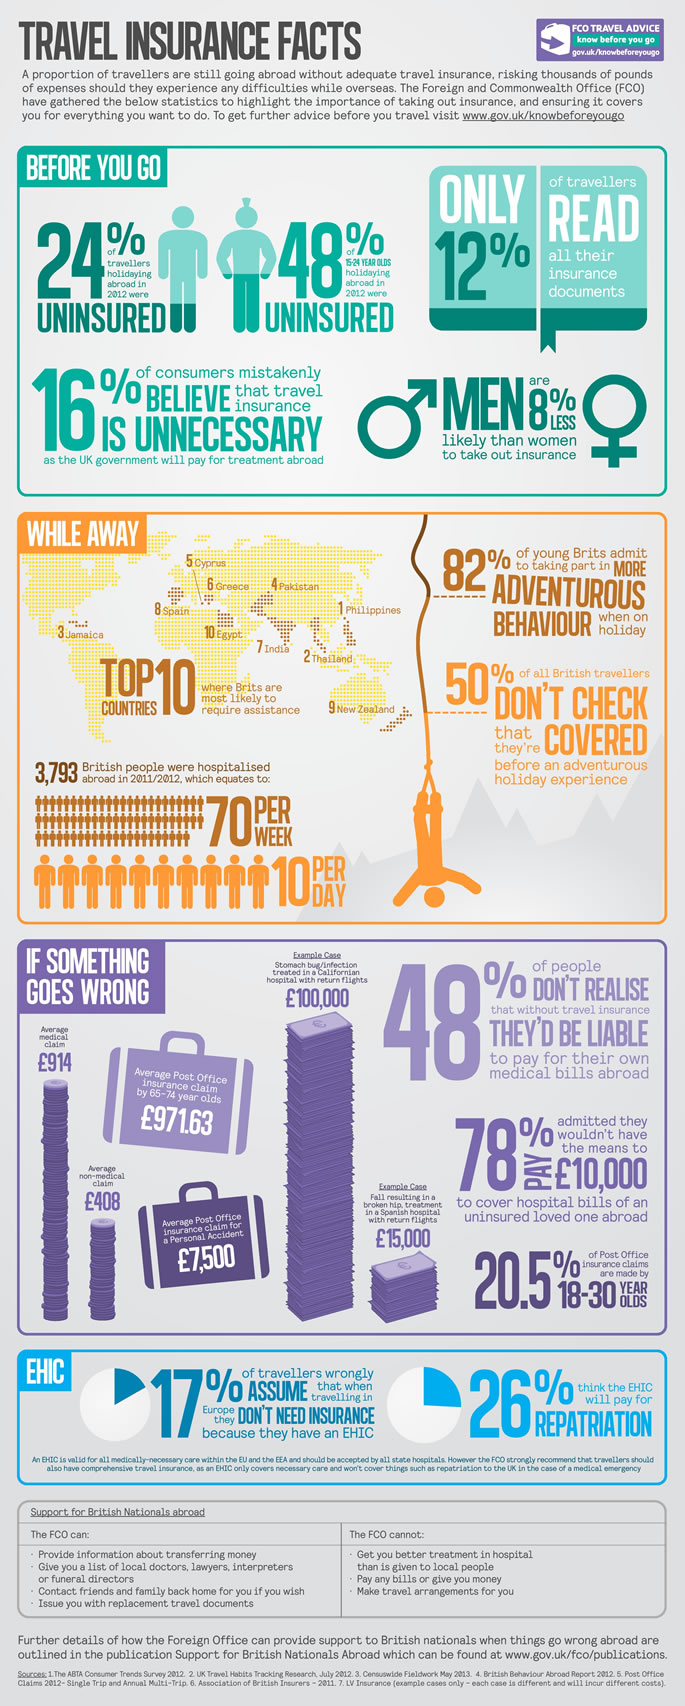 Travel Insurance Infographic